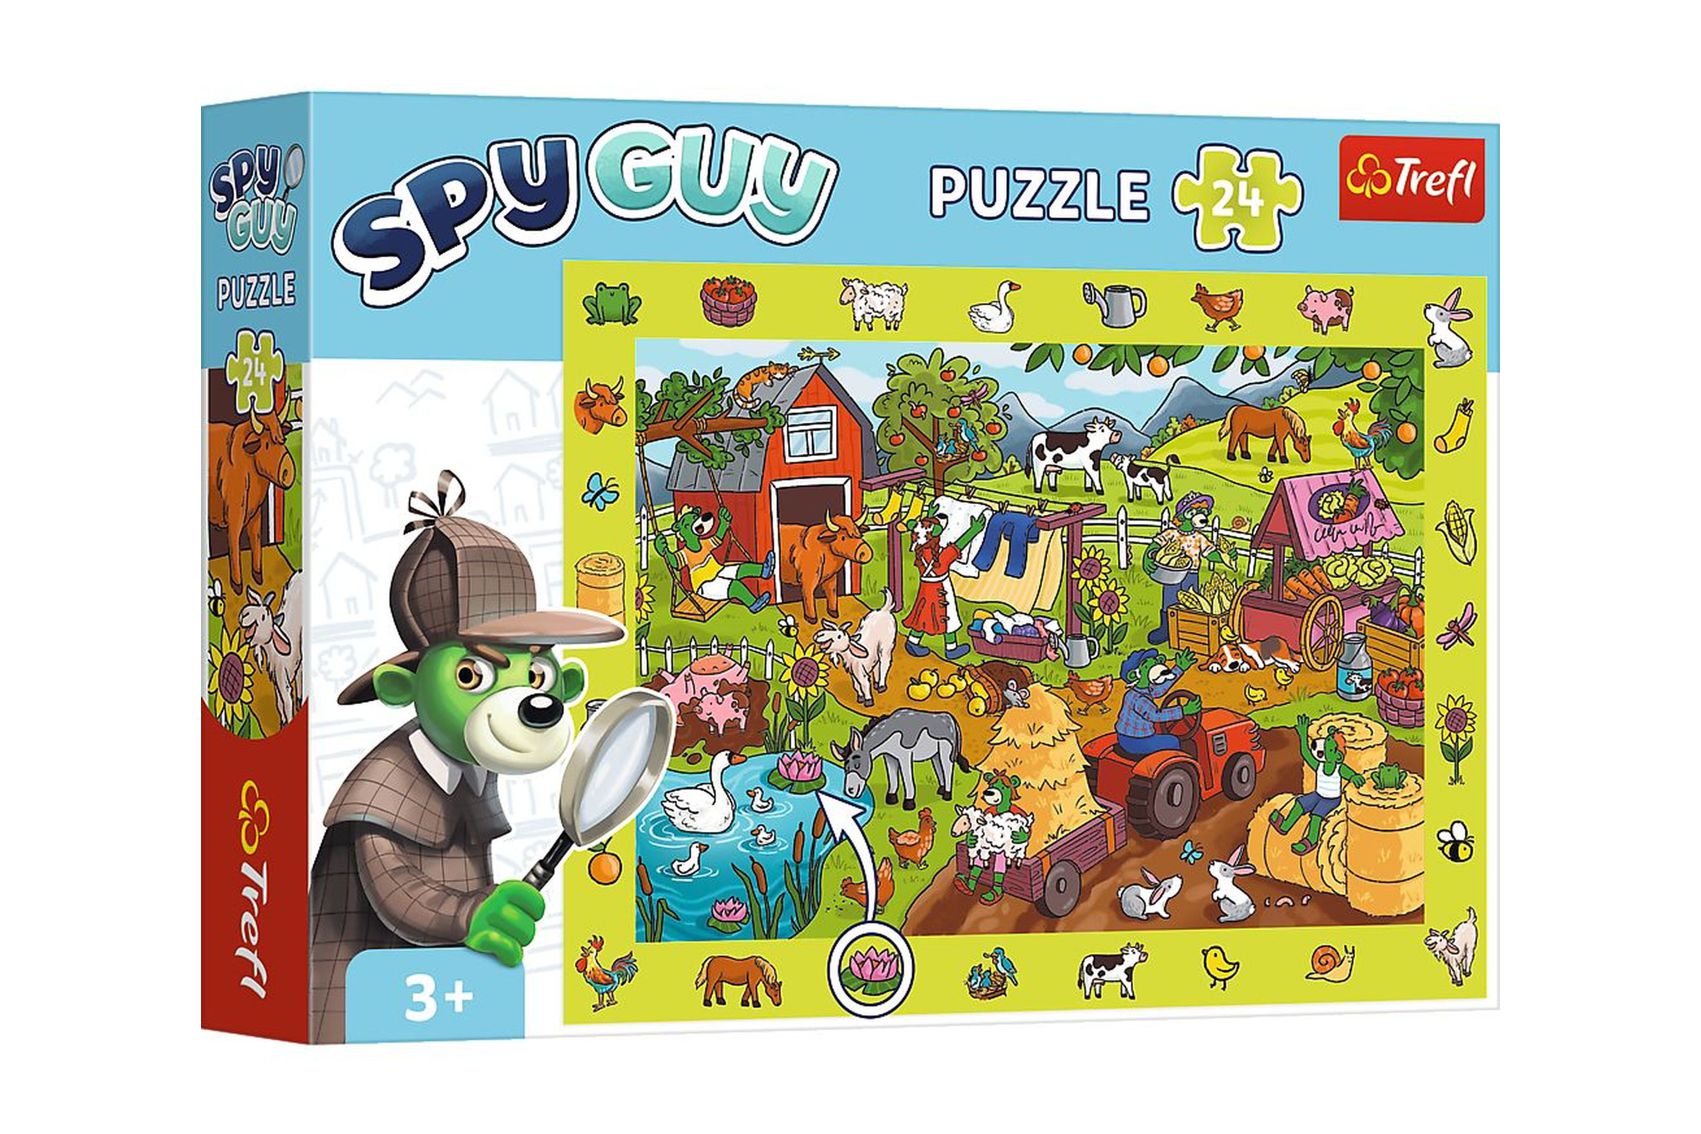 Trefl Puzzle Spy Guy - Farma 18,9x13,4cm 24 dílků v krabici 33x23x6cm